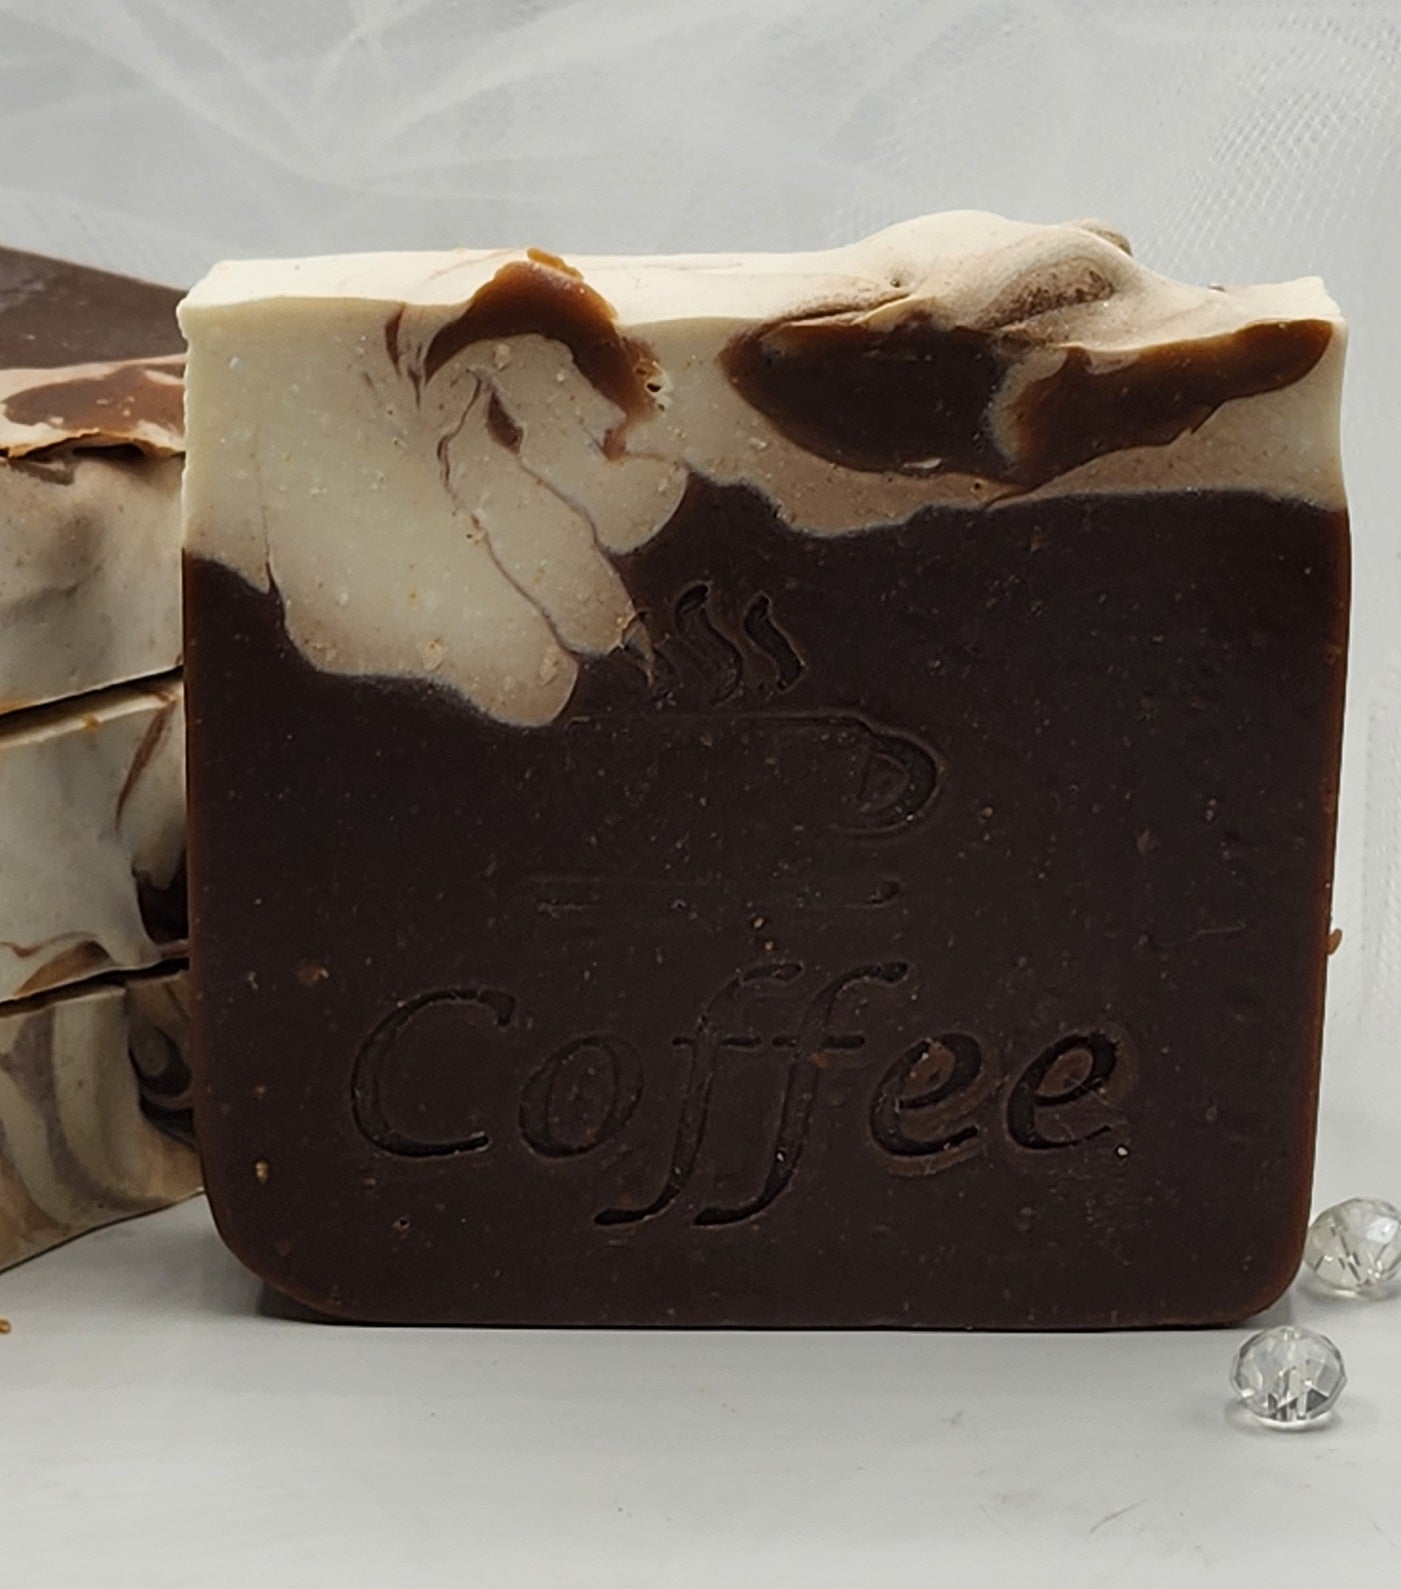 CARAMEL COFFEE / GOAT'S MILK SOAP / FALL SOAPS / AUTUMN SOAP / Bar Soap / Gift Soap / Gift Idea / Handmade Soap / Cold Process Soap